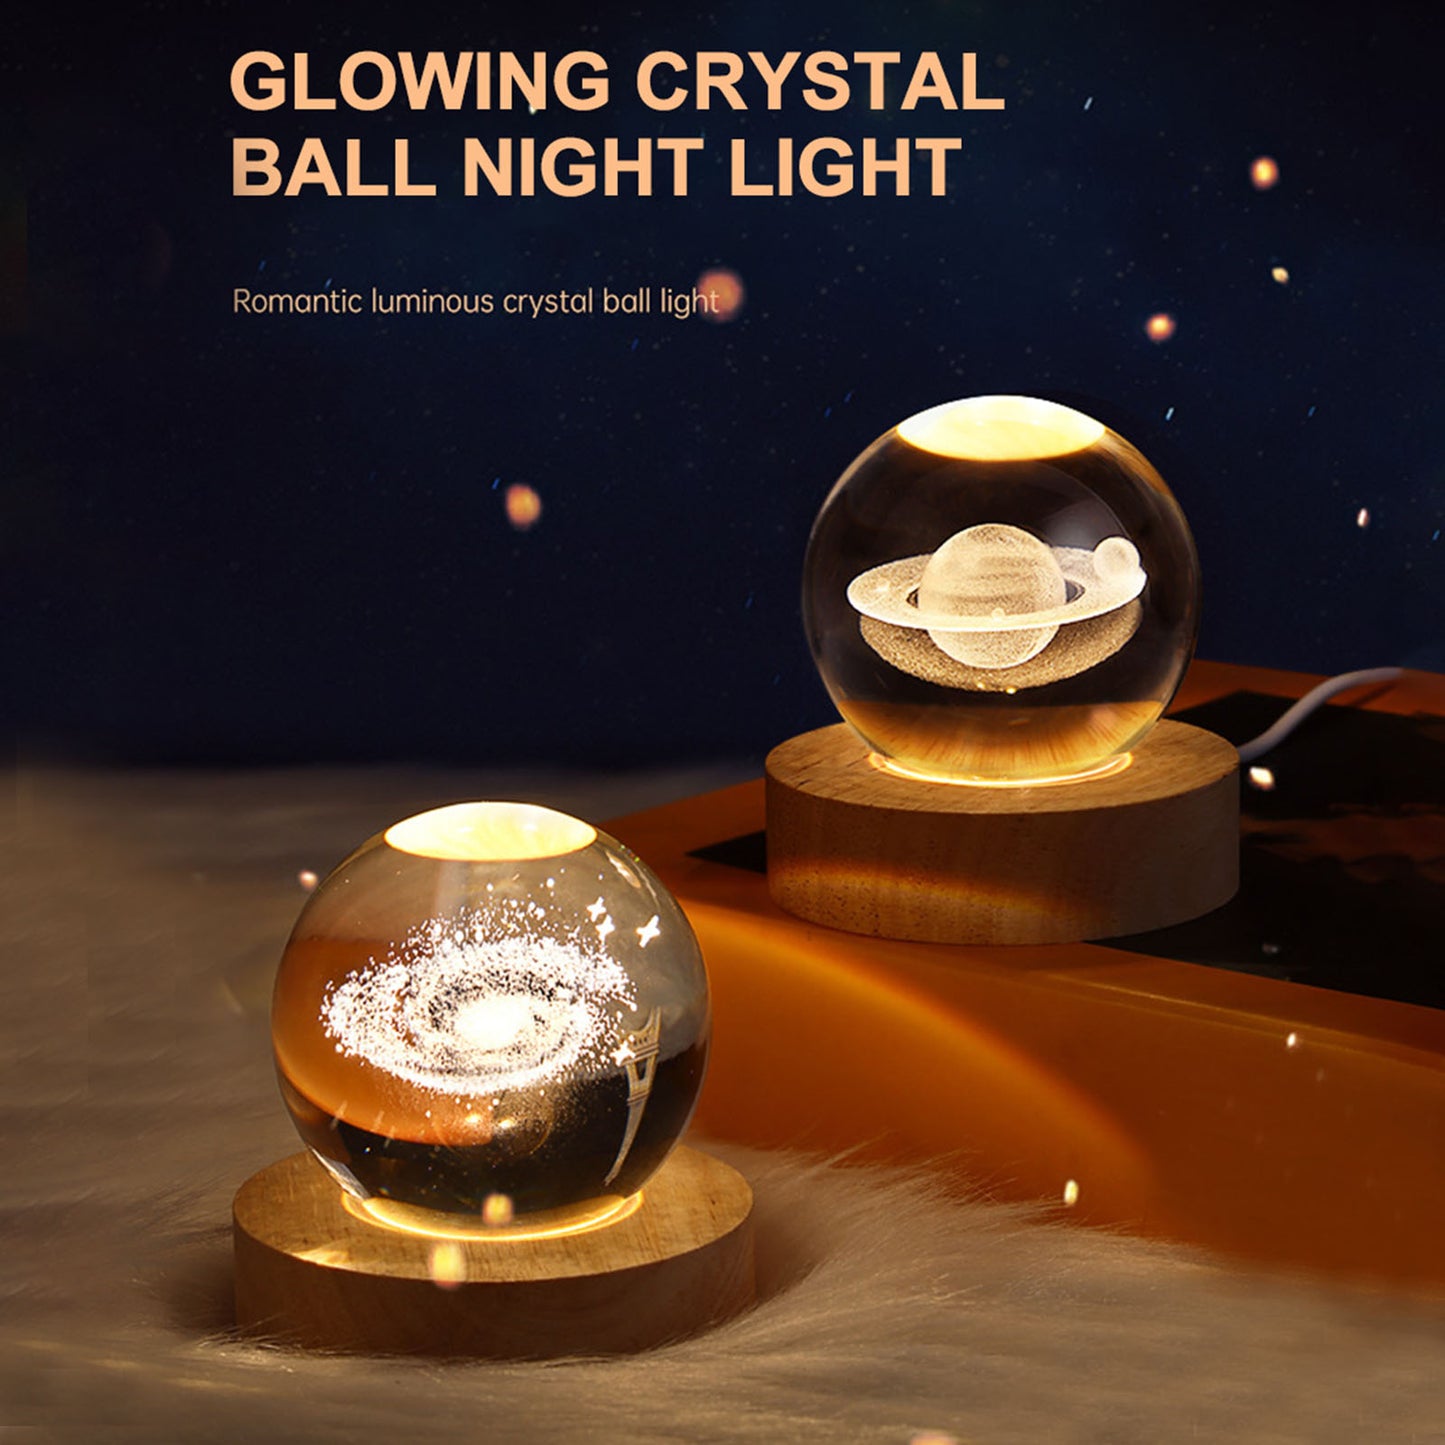 Crystal Ball Glowing Night Light